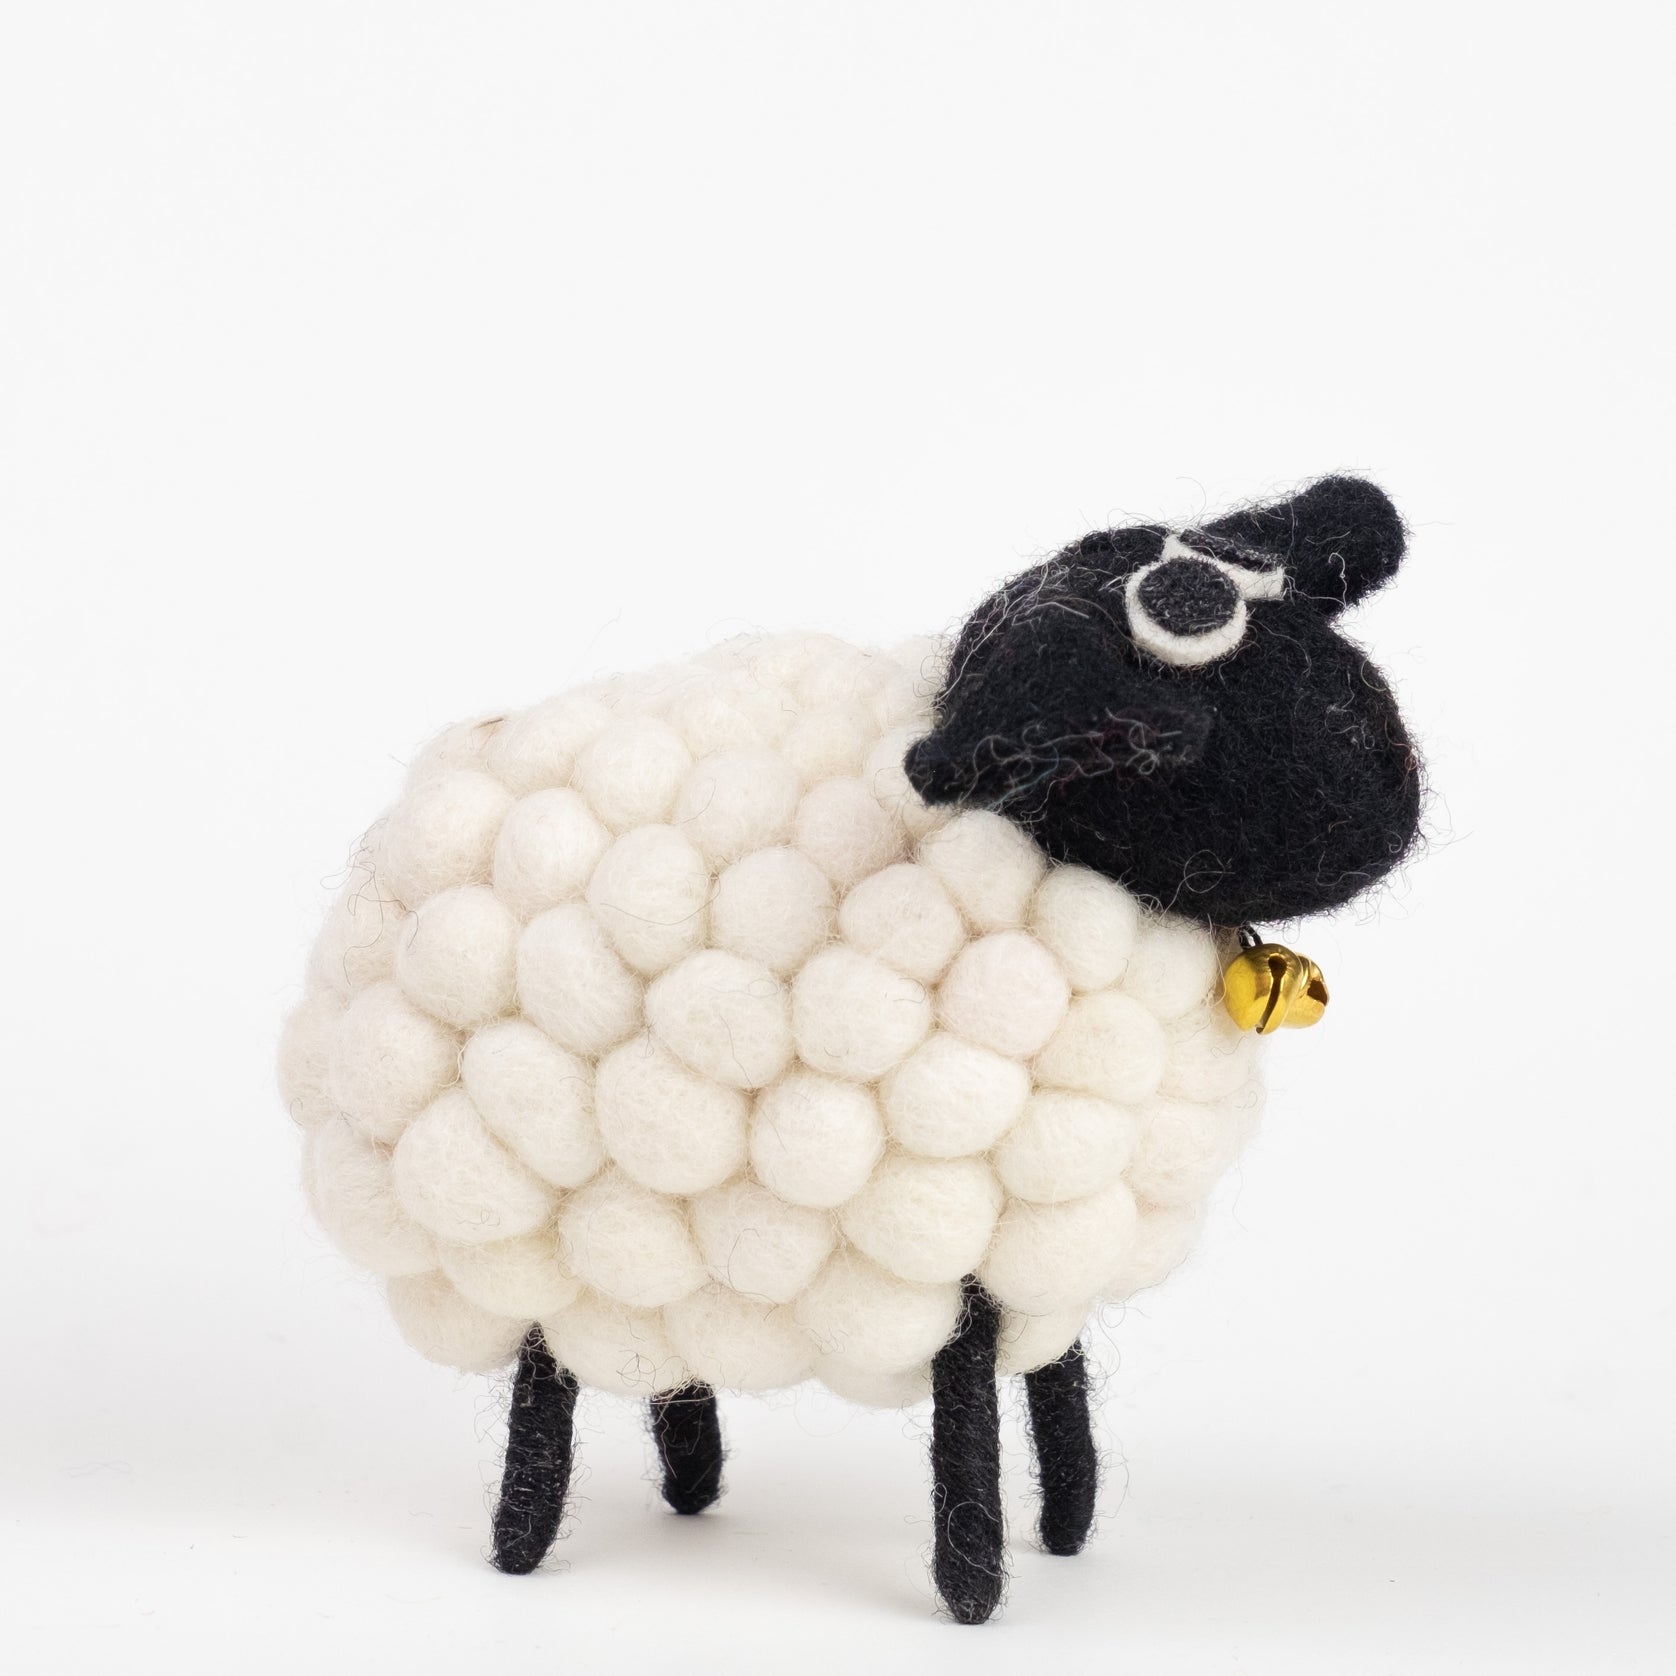 TWR - Felt Sheep - Large - Black and White